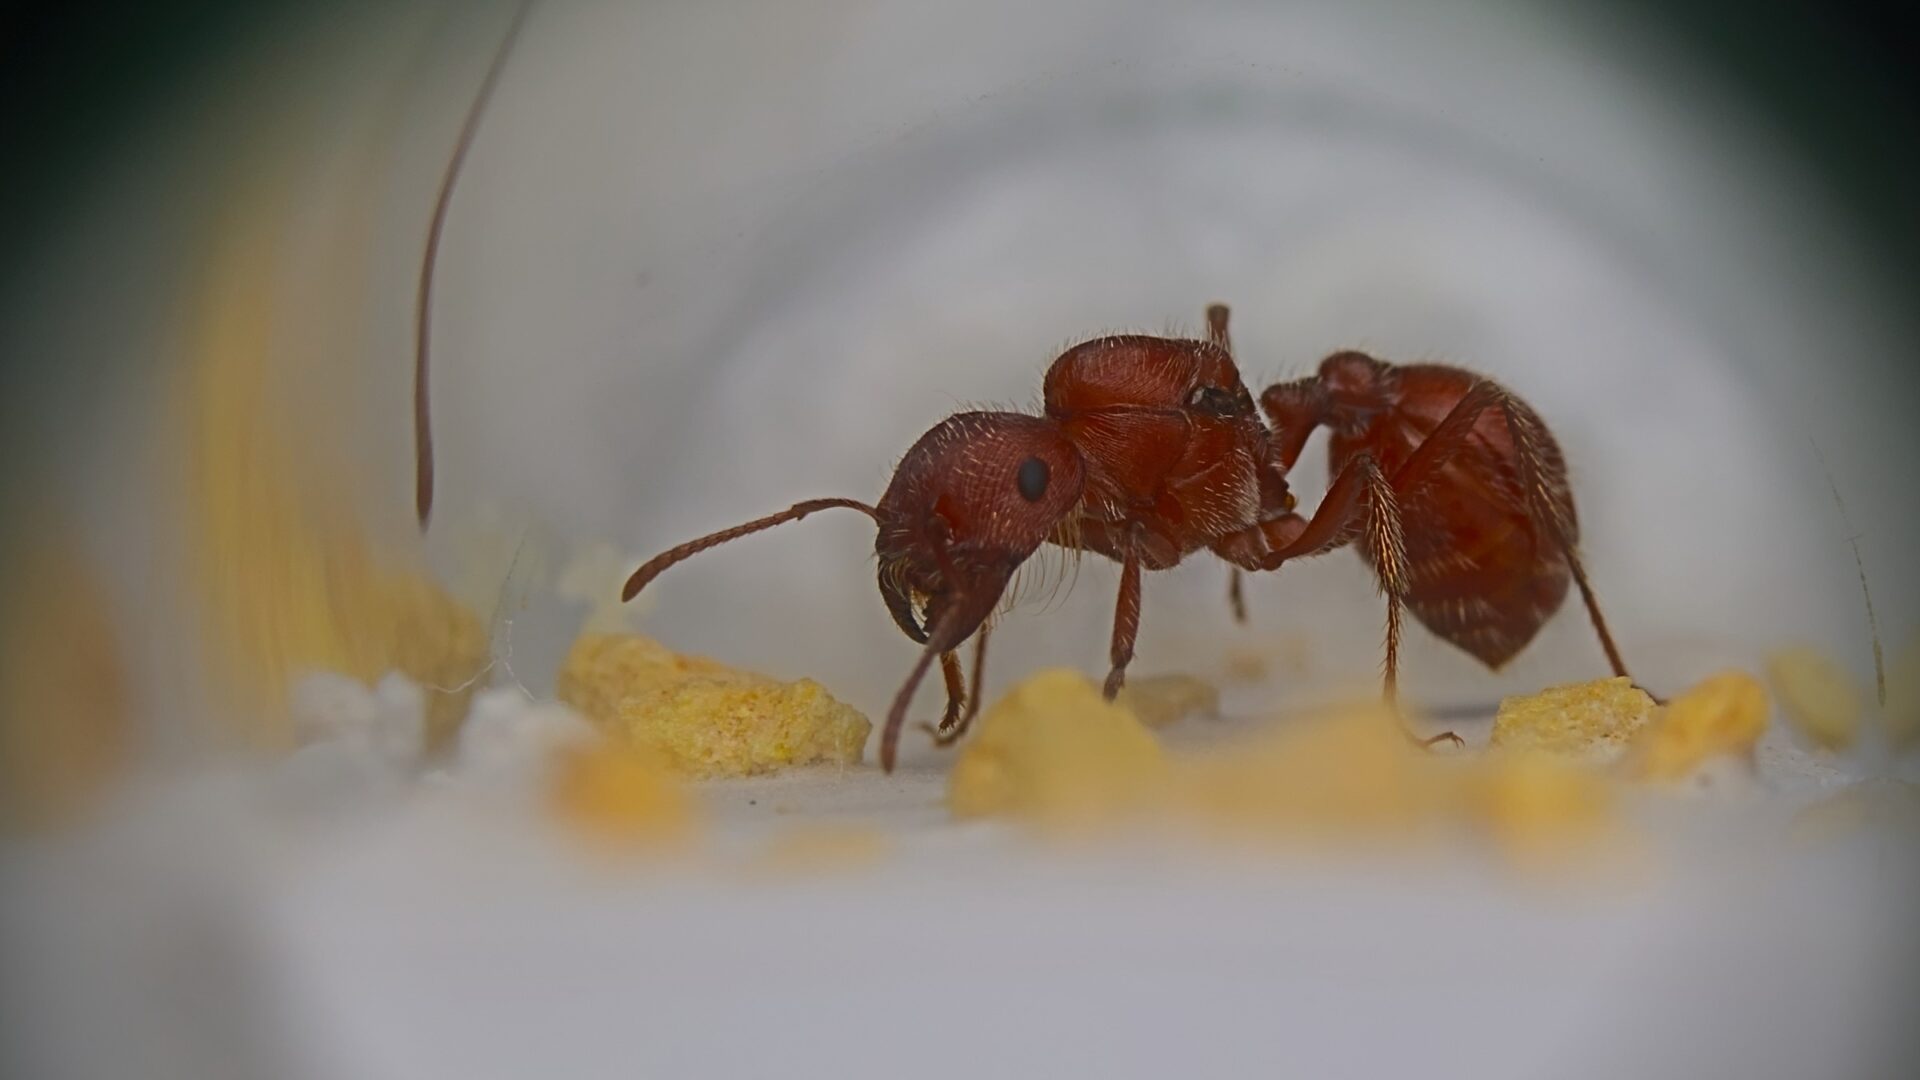 Golden Tail Ants For Sale (C. sansabeanus)